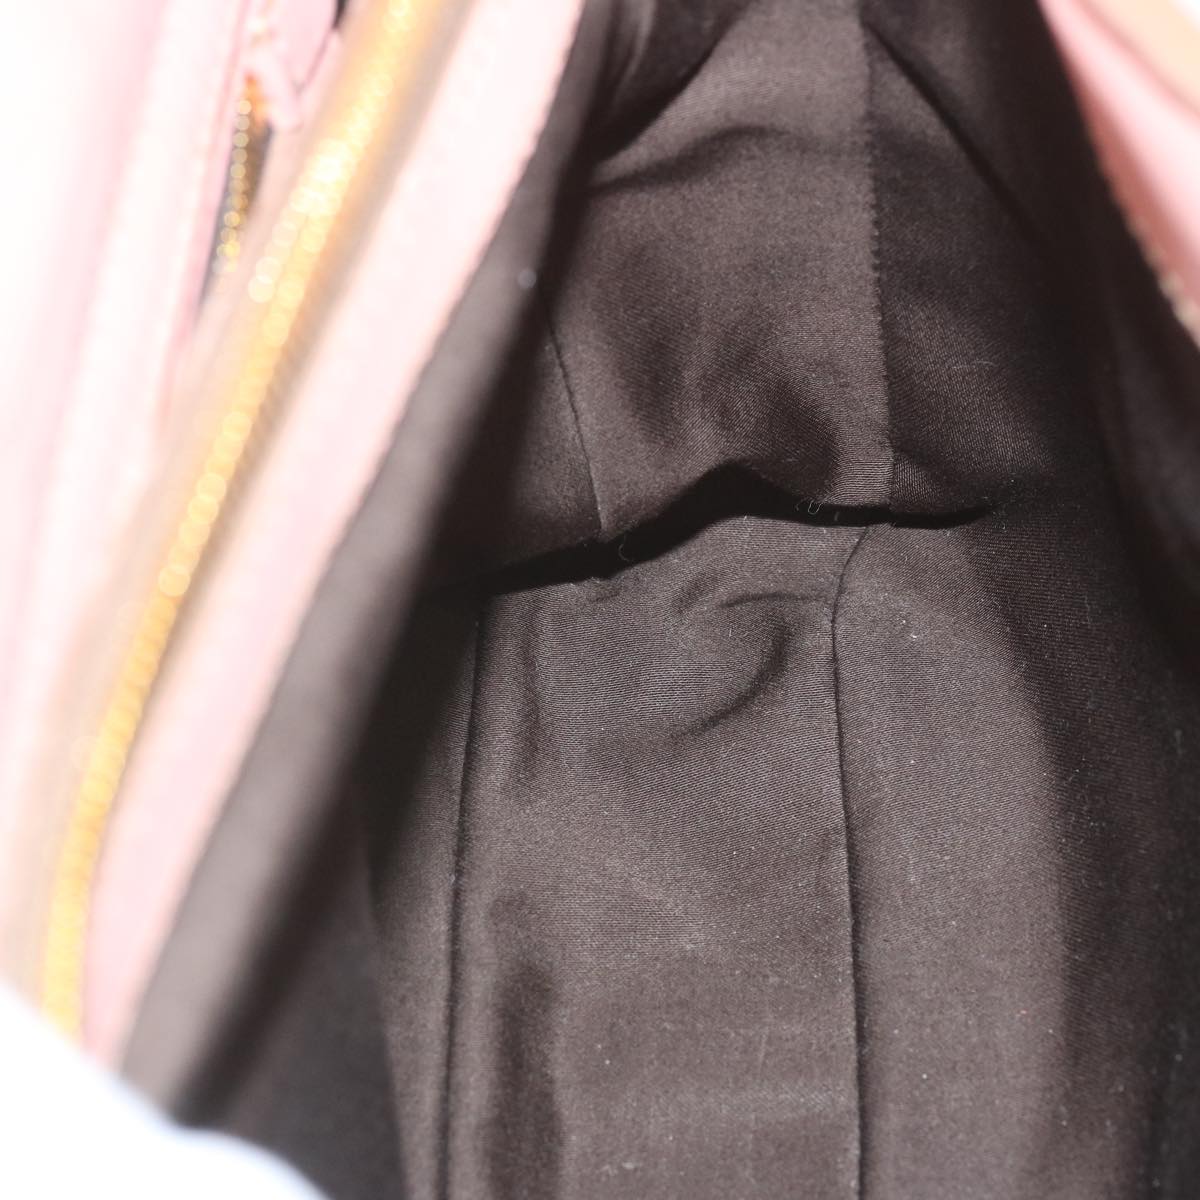 Miu Miu Madras Hand Bag Leather 2way Pink Auth yb528